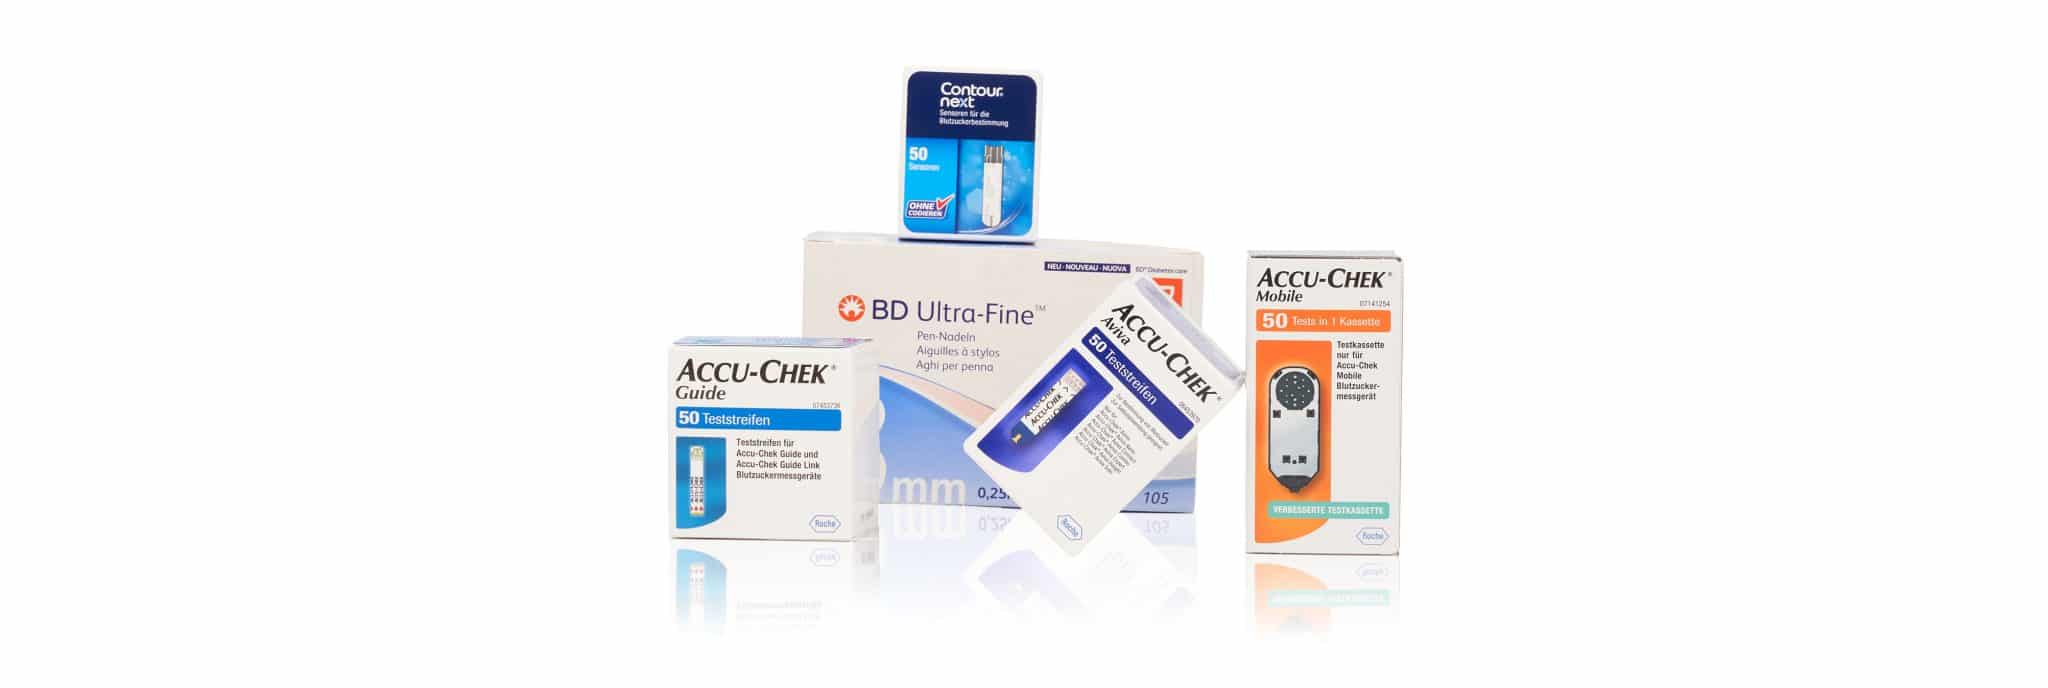 Diabetes Produkte - Teststreifen ACCU-CHEK Guide, ACCU-CHEK Aviva, ACCU-CHEK Mobile, BD Ultra-Fine Pen Nadeln, Contour Next Blutzucker Test Sensoren